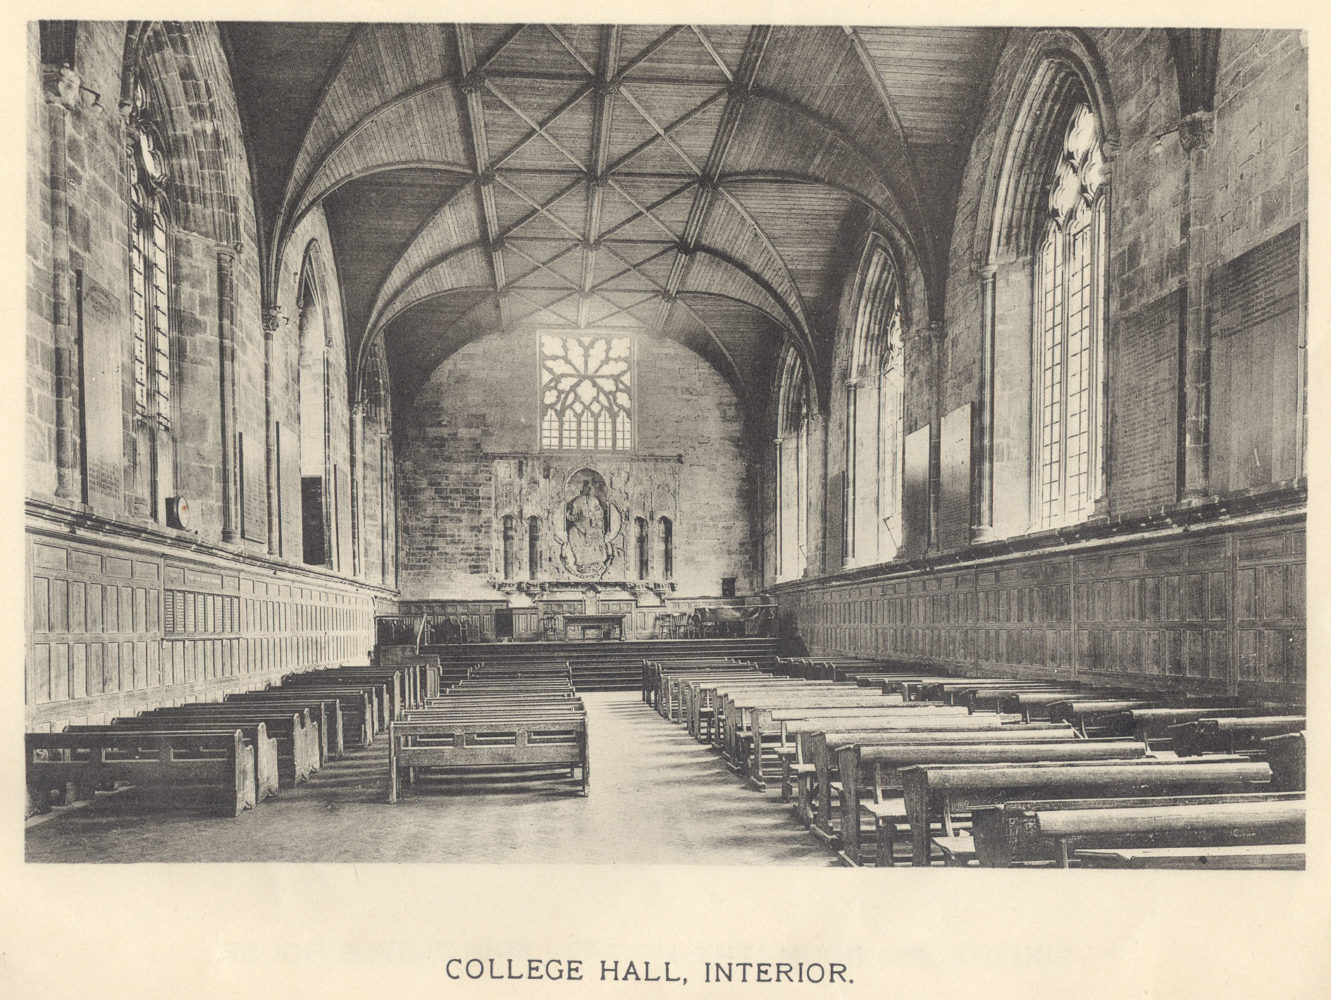 College Hall interior